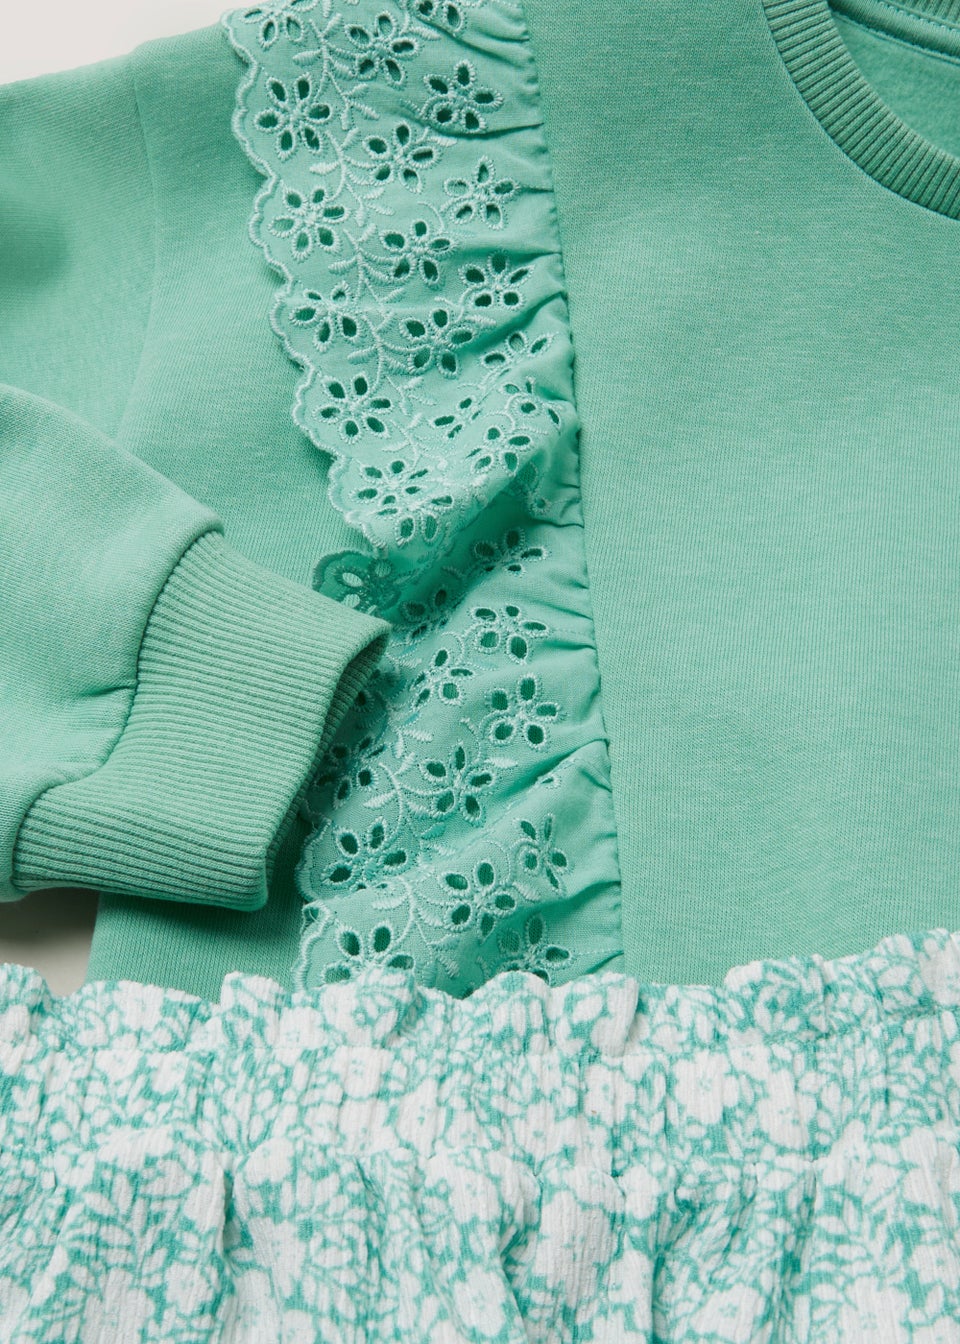 Girls Green Sweatshirt & Floral Skirt Set (3-14yrs)